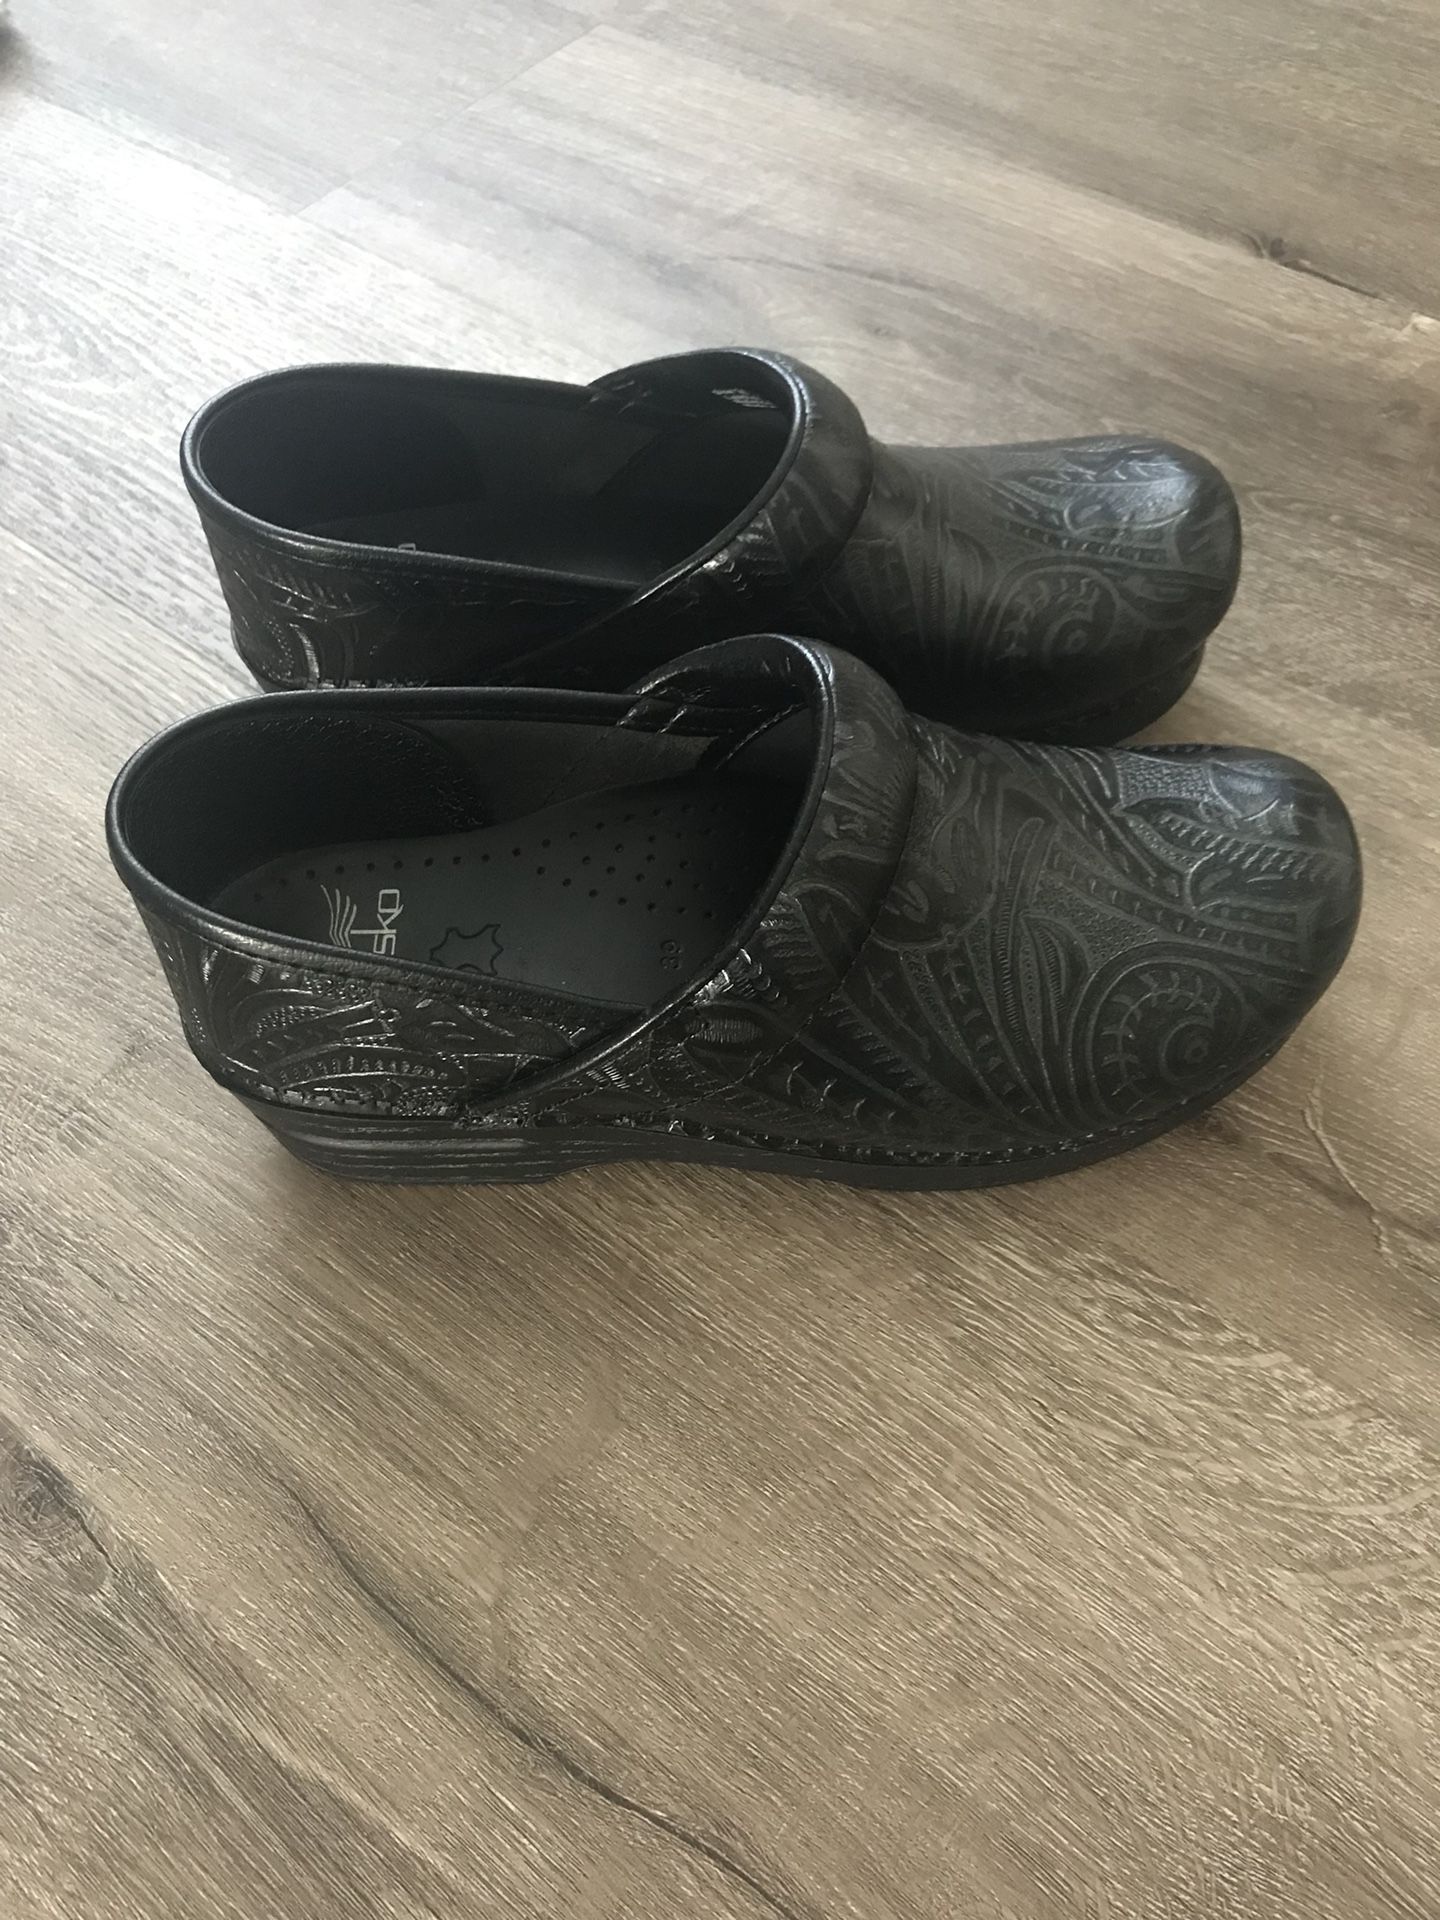 Dansko Professional Tooled Black Clogs Size 39